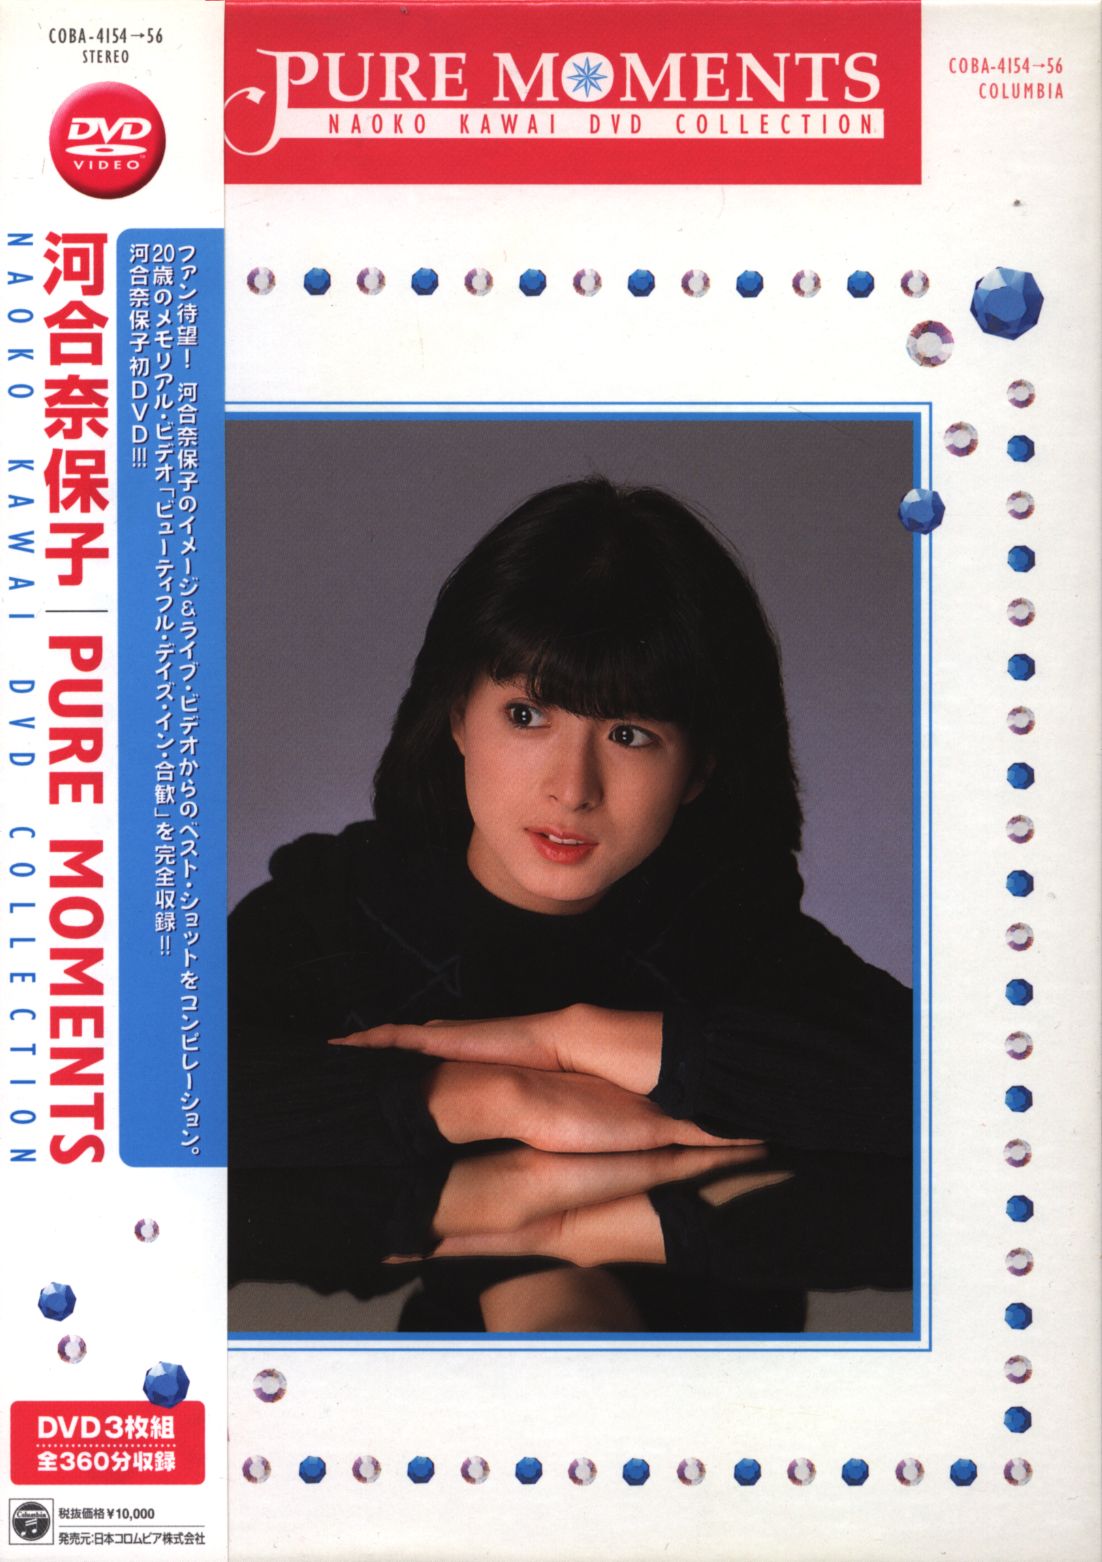 DVD Naoko Kawai Pure Moments (First Edition Disc) | Mandarake